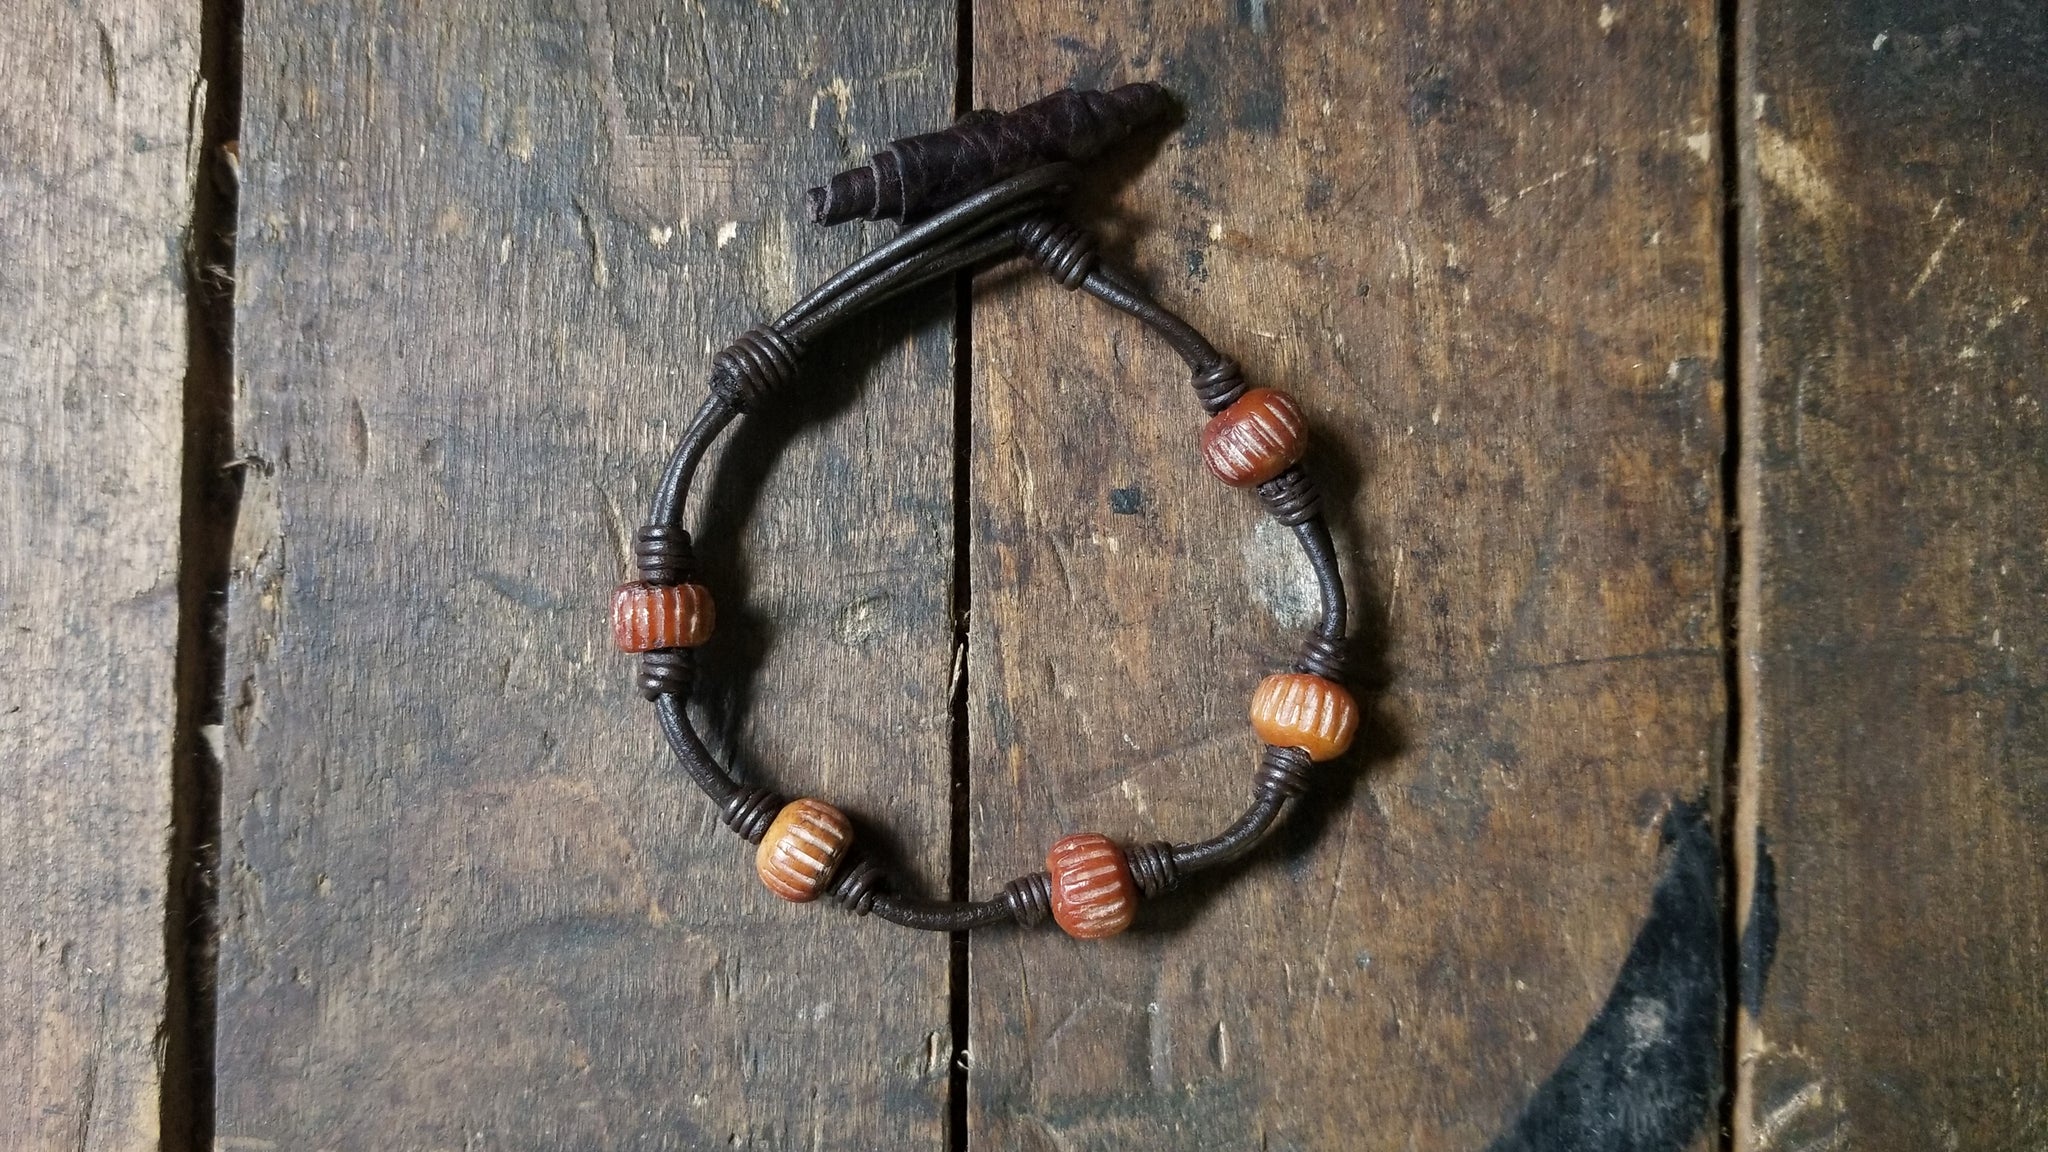 Chuma Leather Bracelet with Leather Toggle Button & Loop Clasp, camel bone